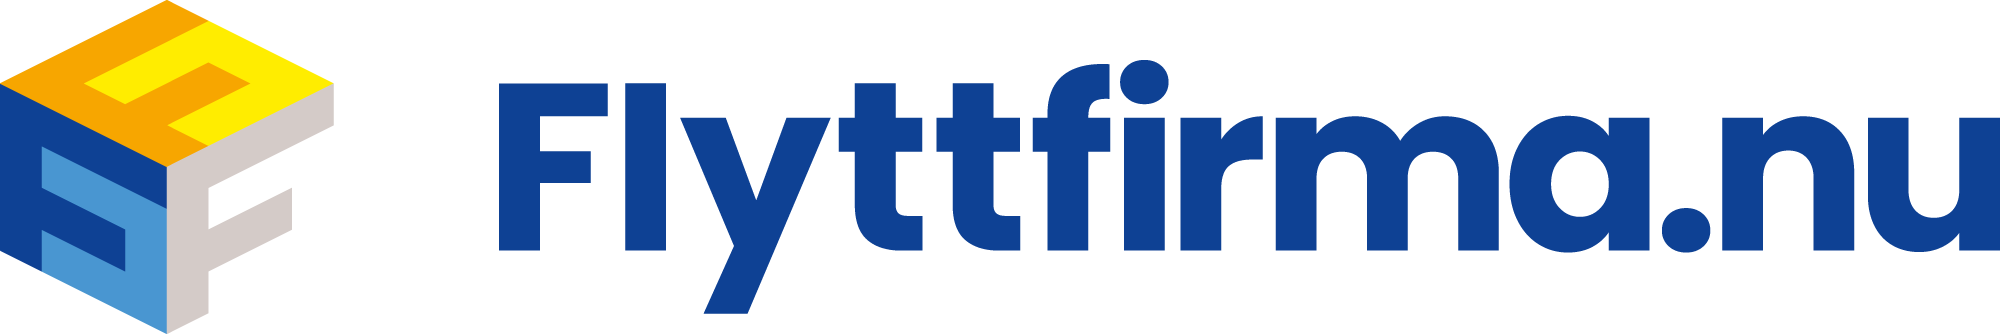 Flyttfirma Logo Black